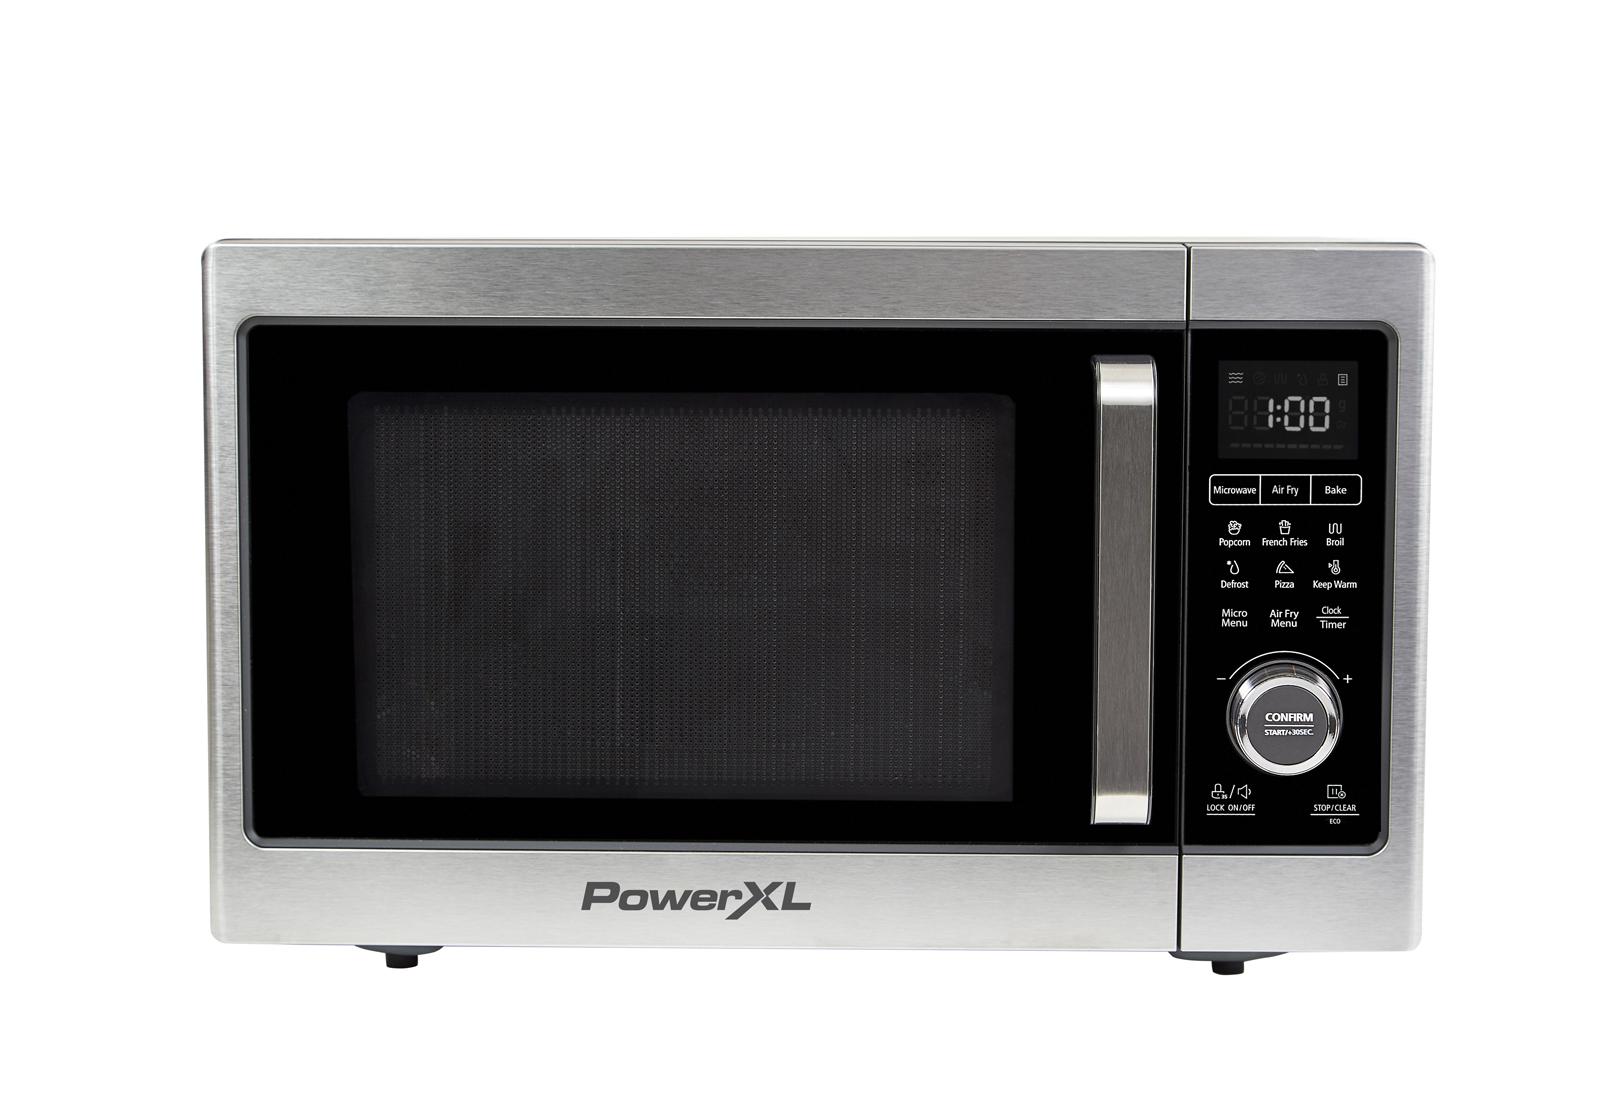 PowerXL Microwave Air Fryer Plus Product Image